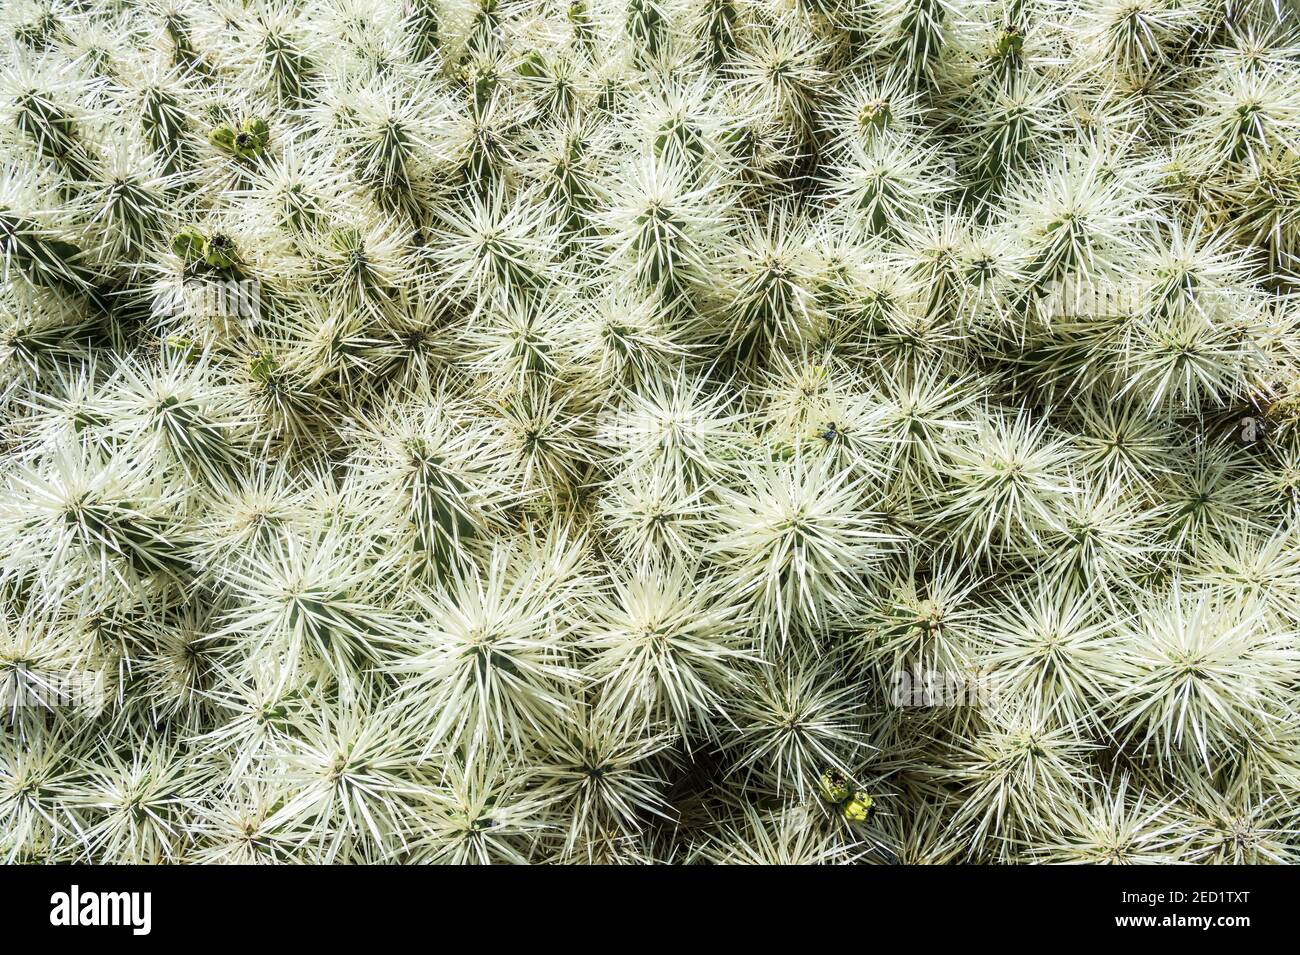 Jardin de Cactus, giardino di cactus Cesar Manrique, Lanzarote, isole Canarie Foto Stock